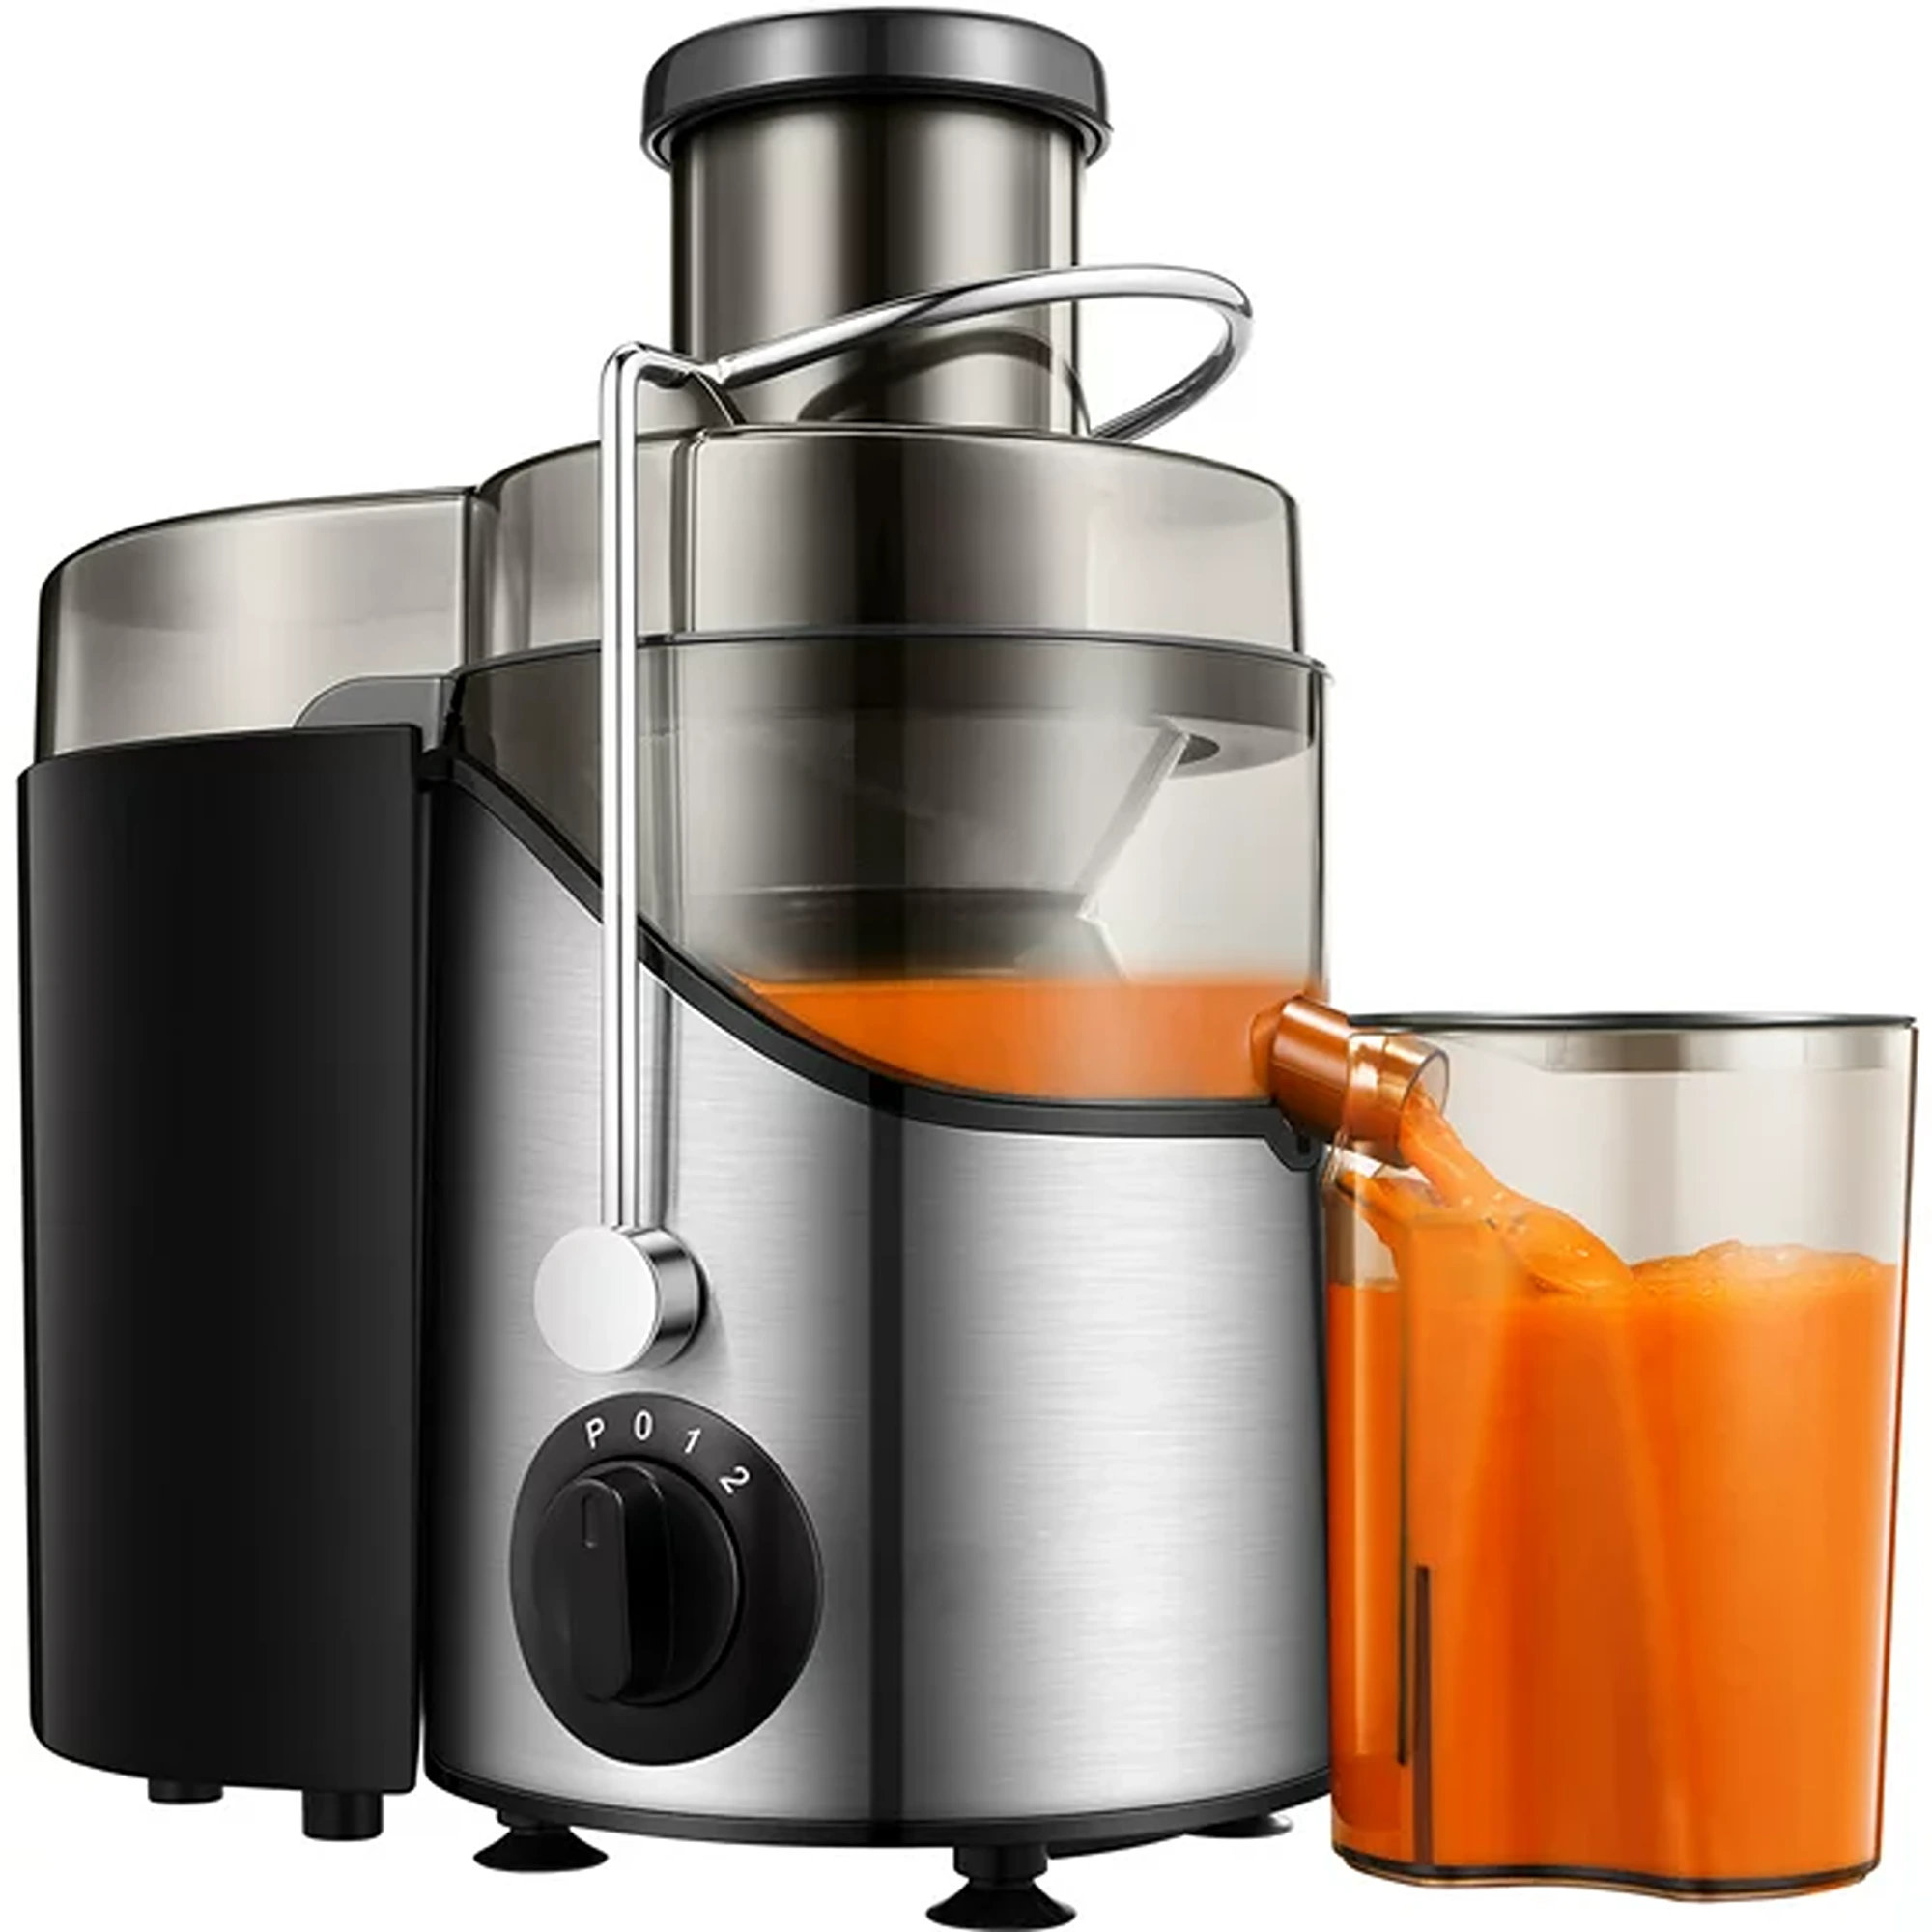 800W Electric Juicer Fruit Vegetable Blender Juice Extractor Citrus Machine  New